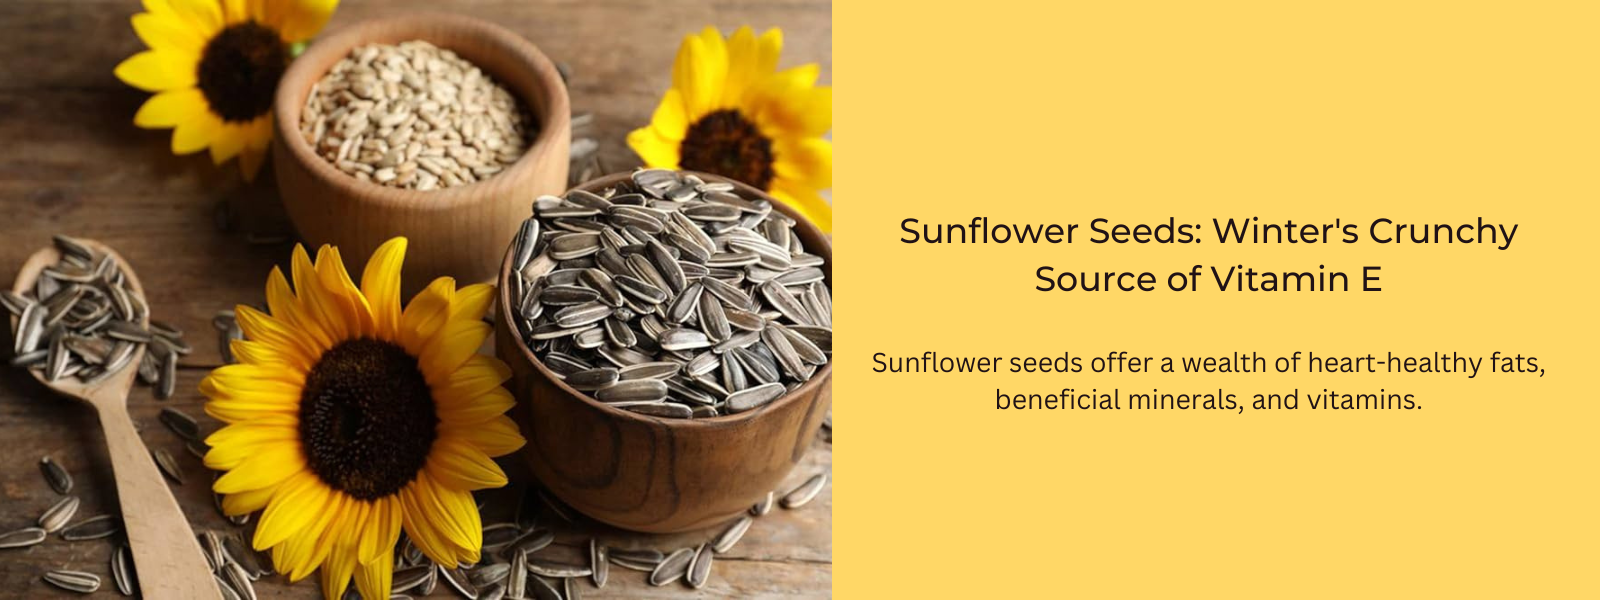 Sunflower Seeds: Winter's Crunchy Source of Vitamin E